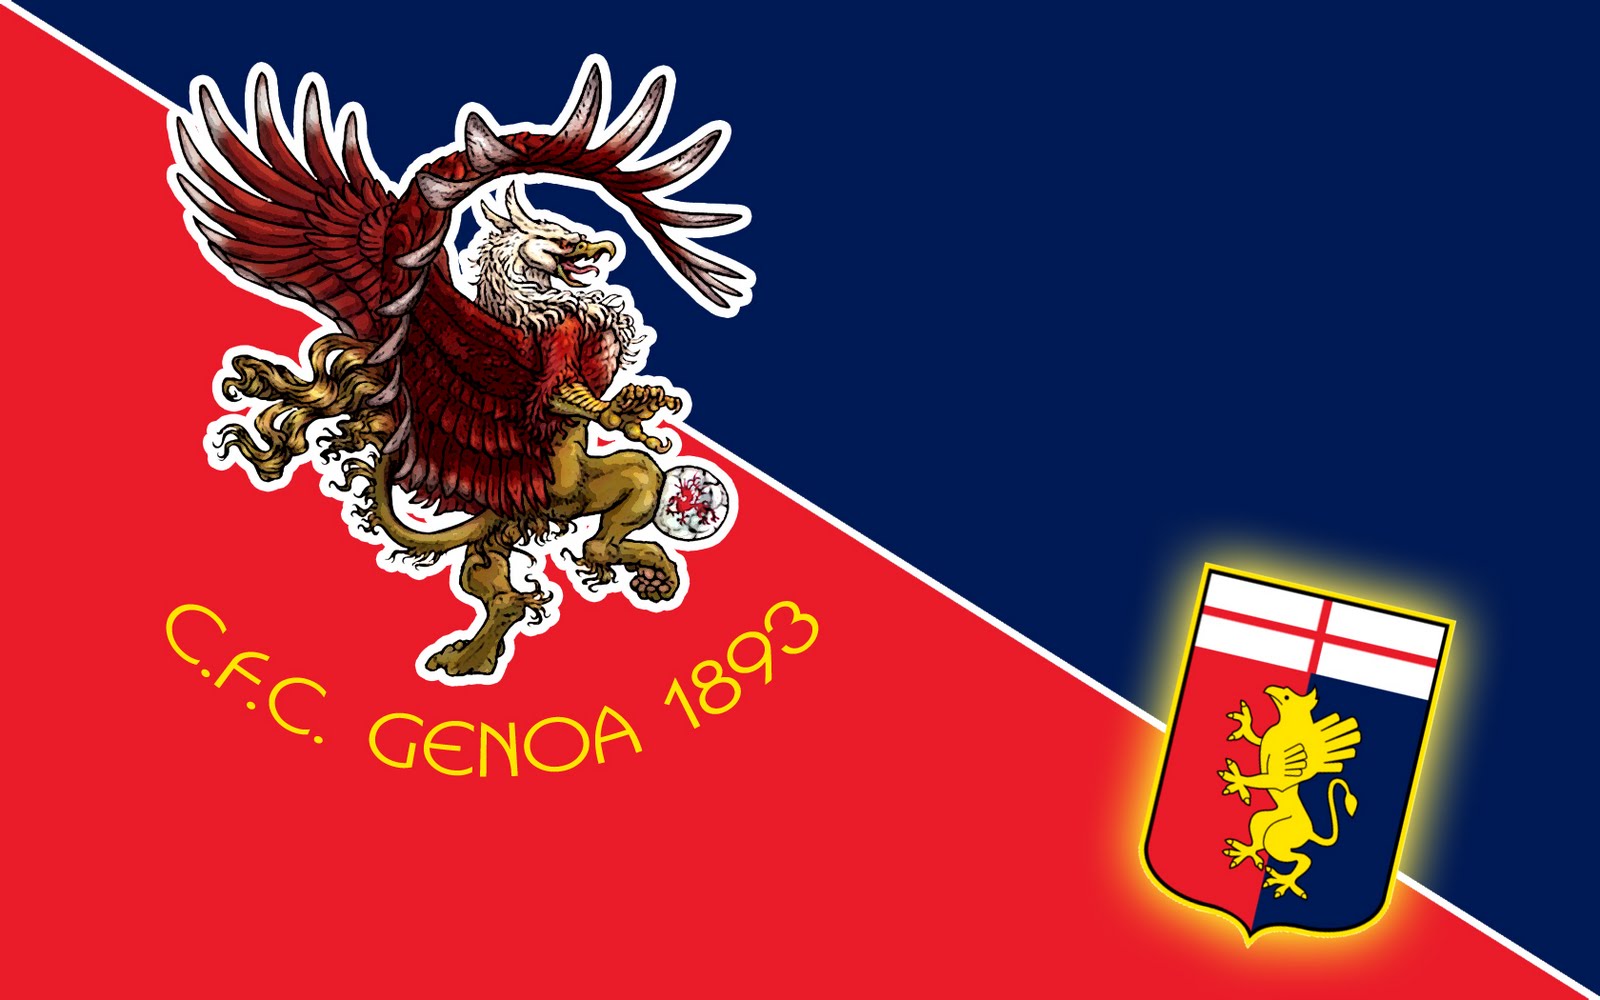 Genoa Wallpaper Image Group